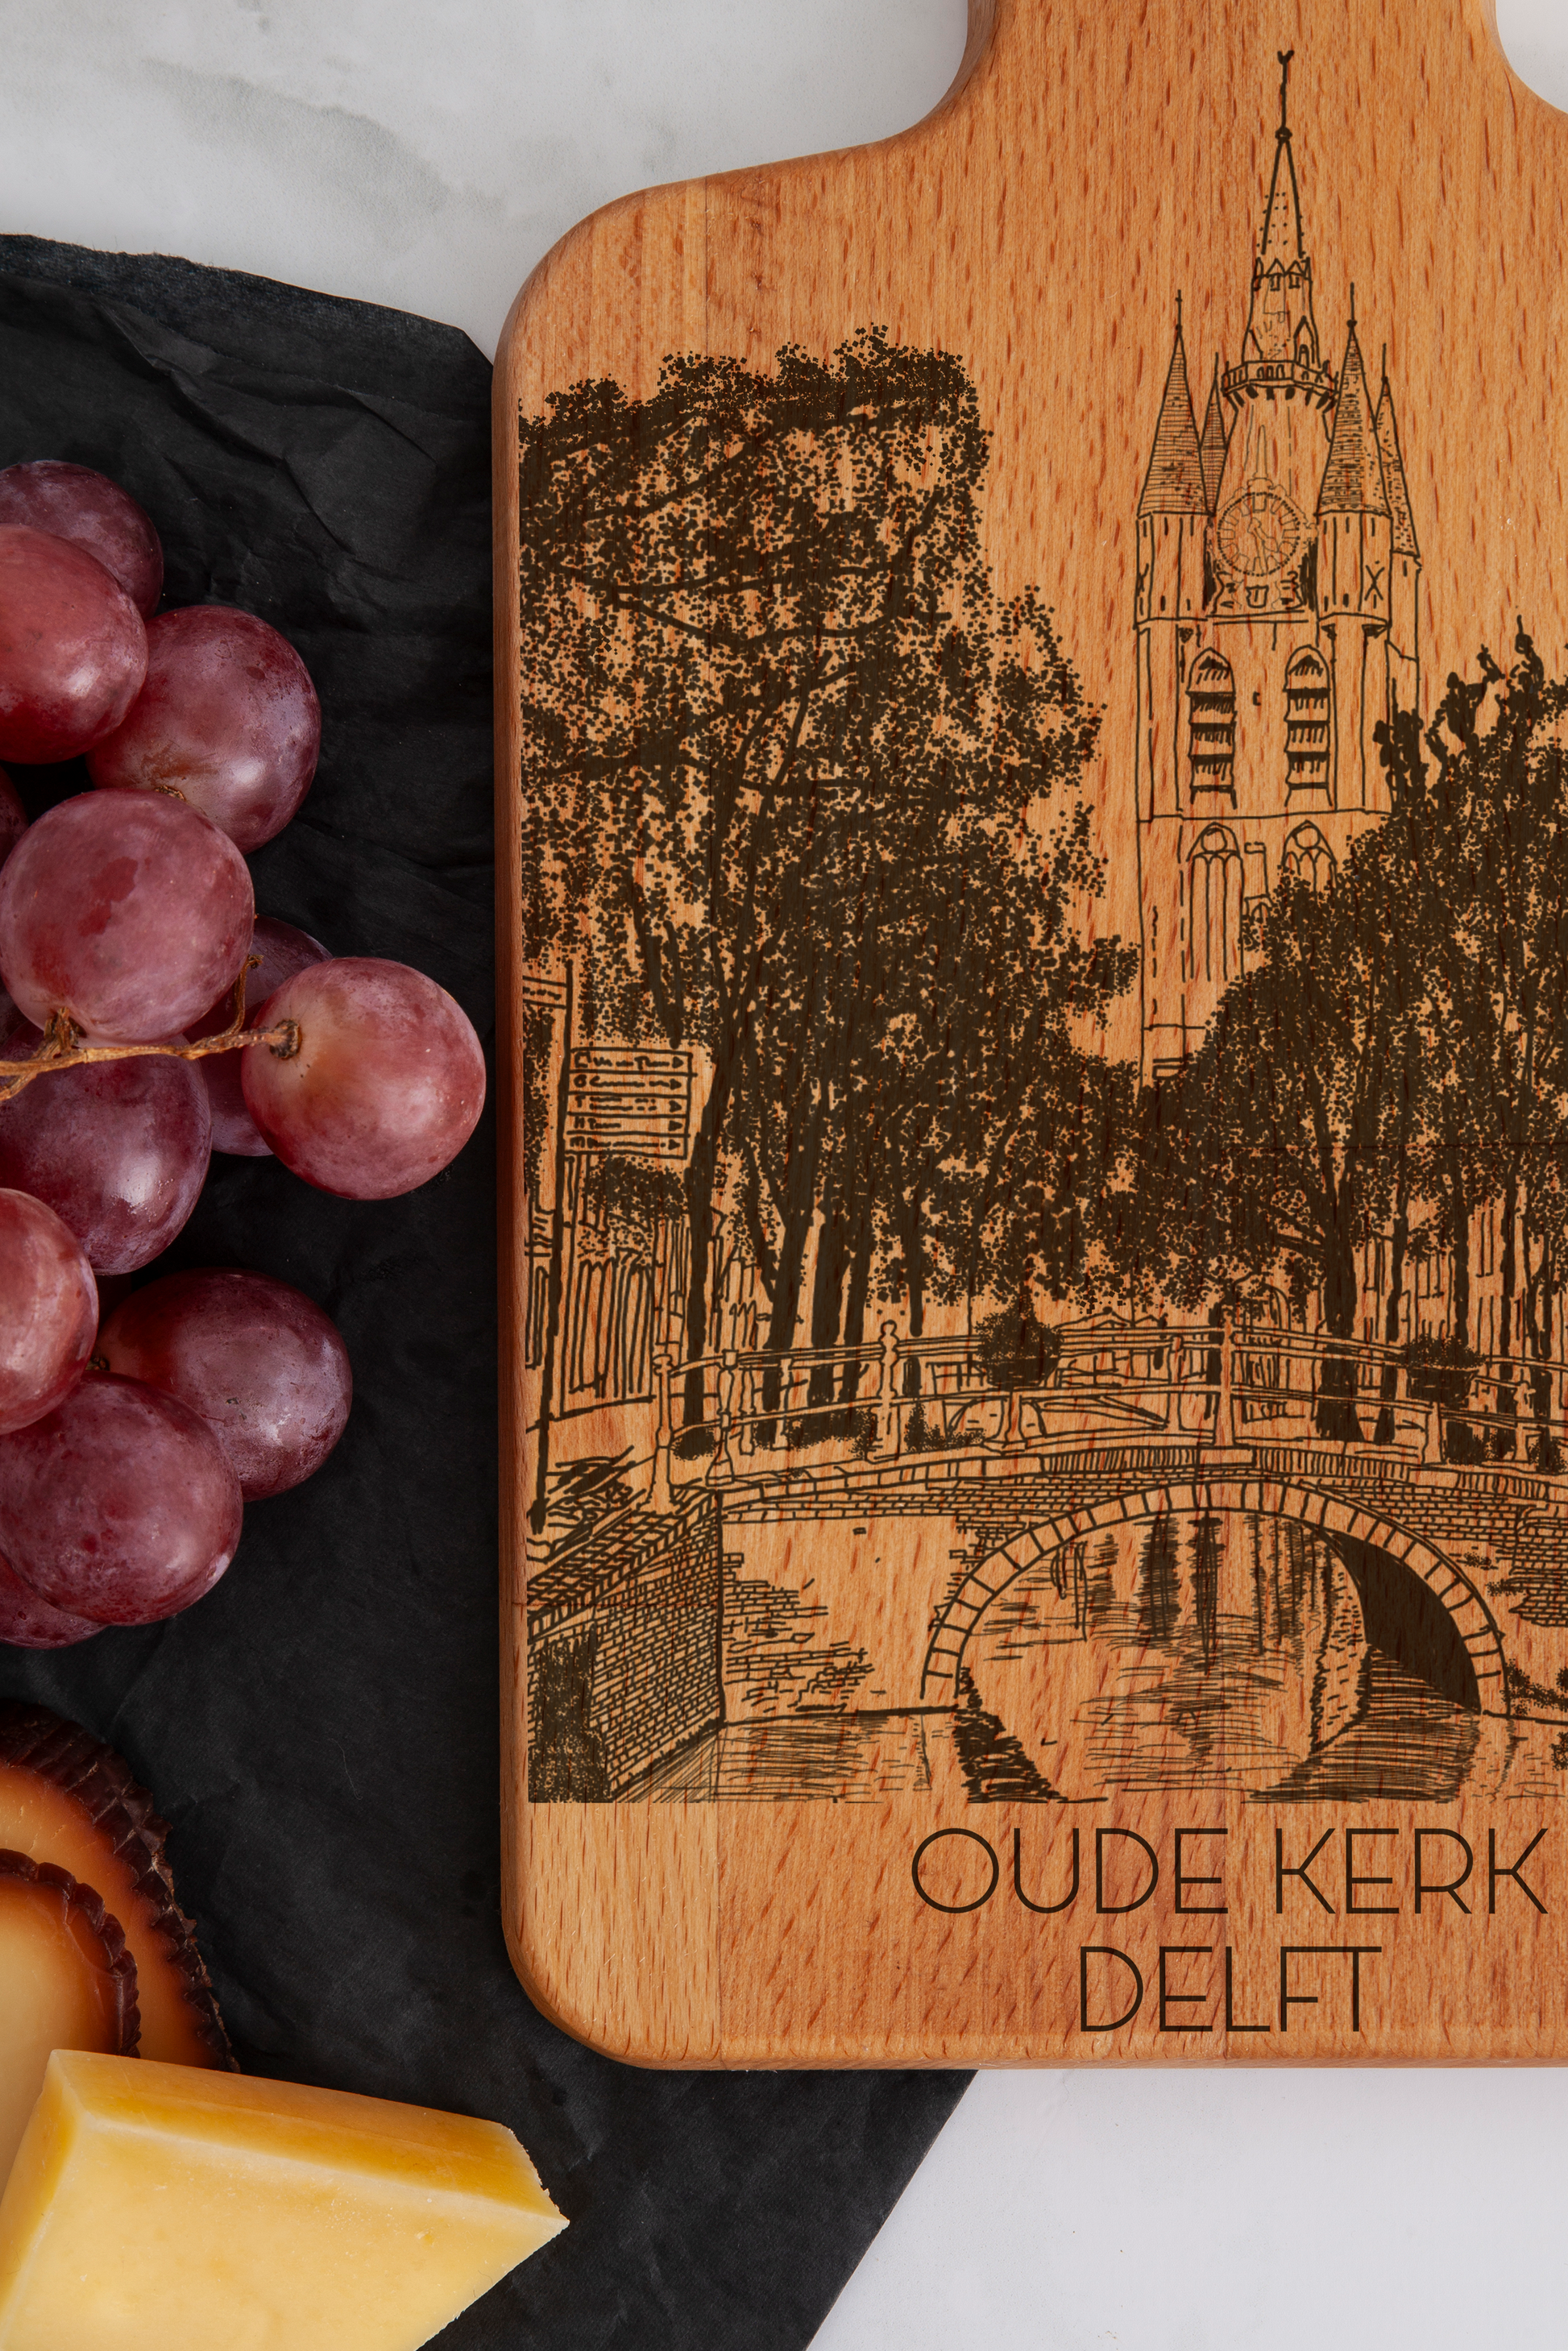 Delft, Oude Kerk, cheese board, close-up